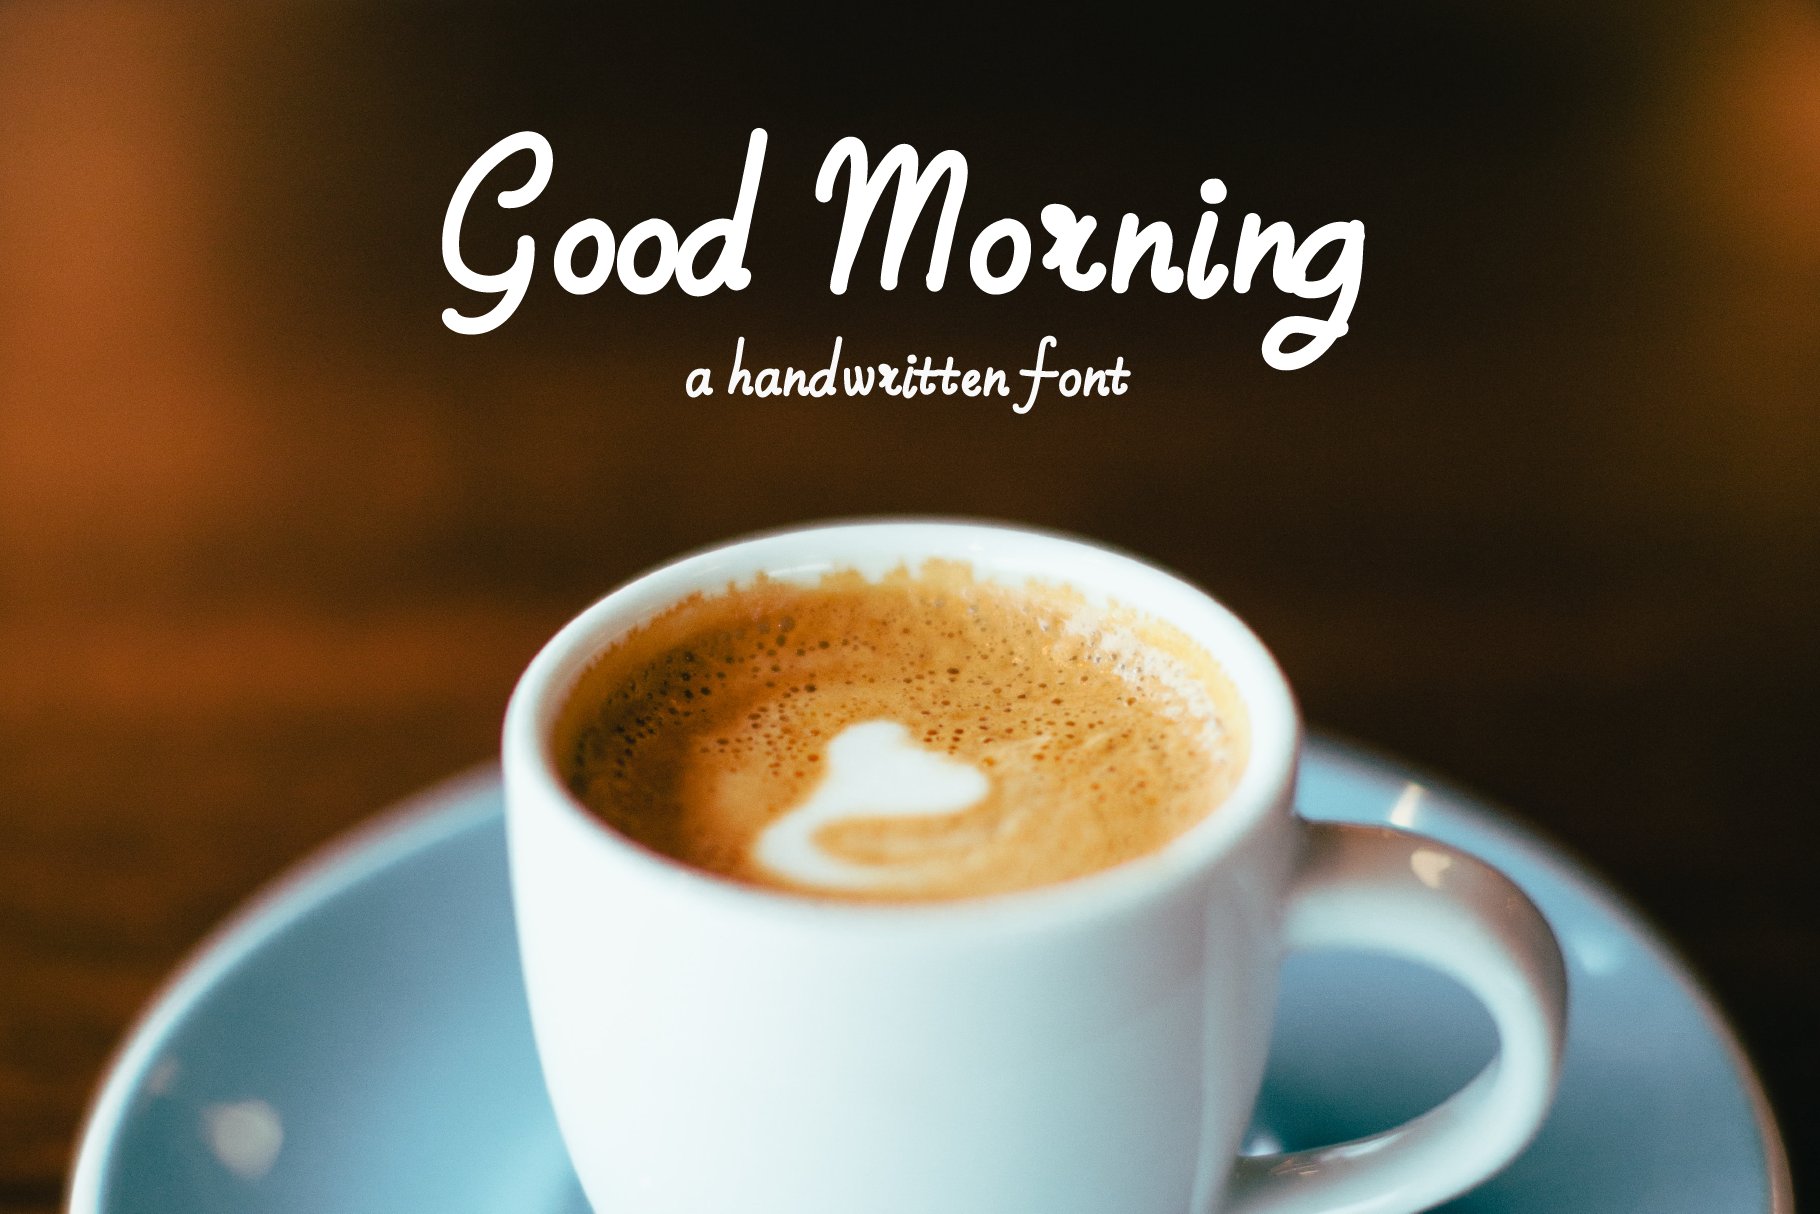 Good Morning Handwritten Font cover image.